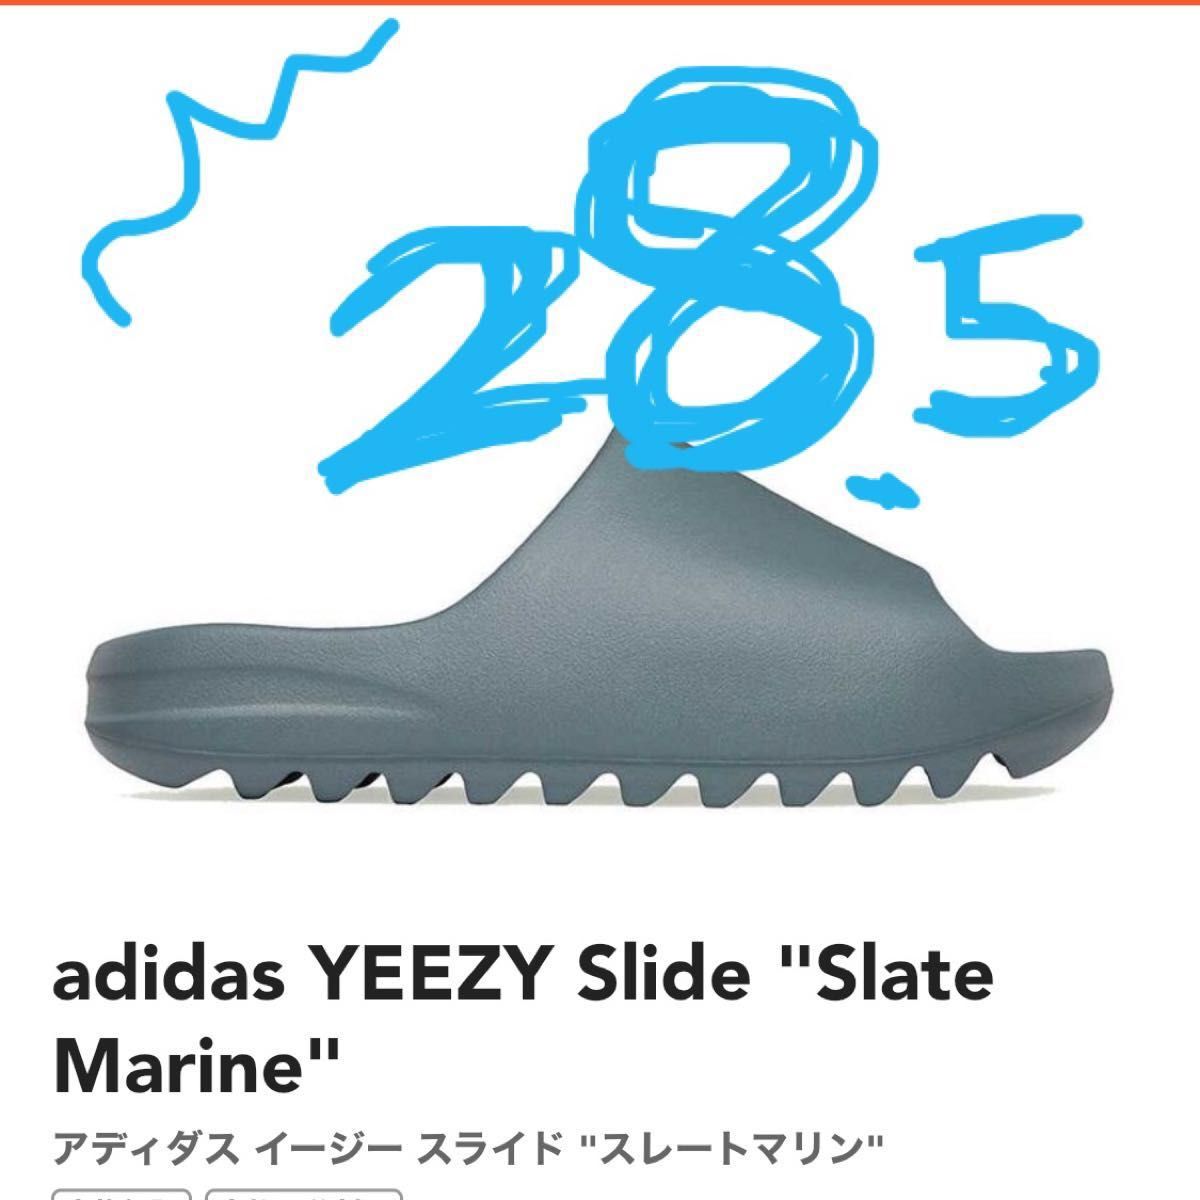 adidas YEEZY Slide Slate Marine アディダス イージー スライド スレートマリン